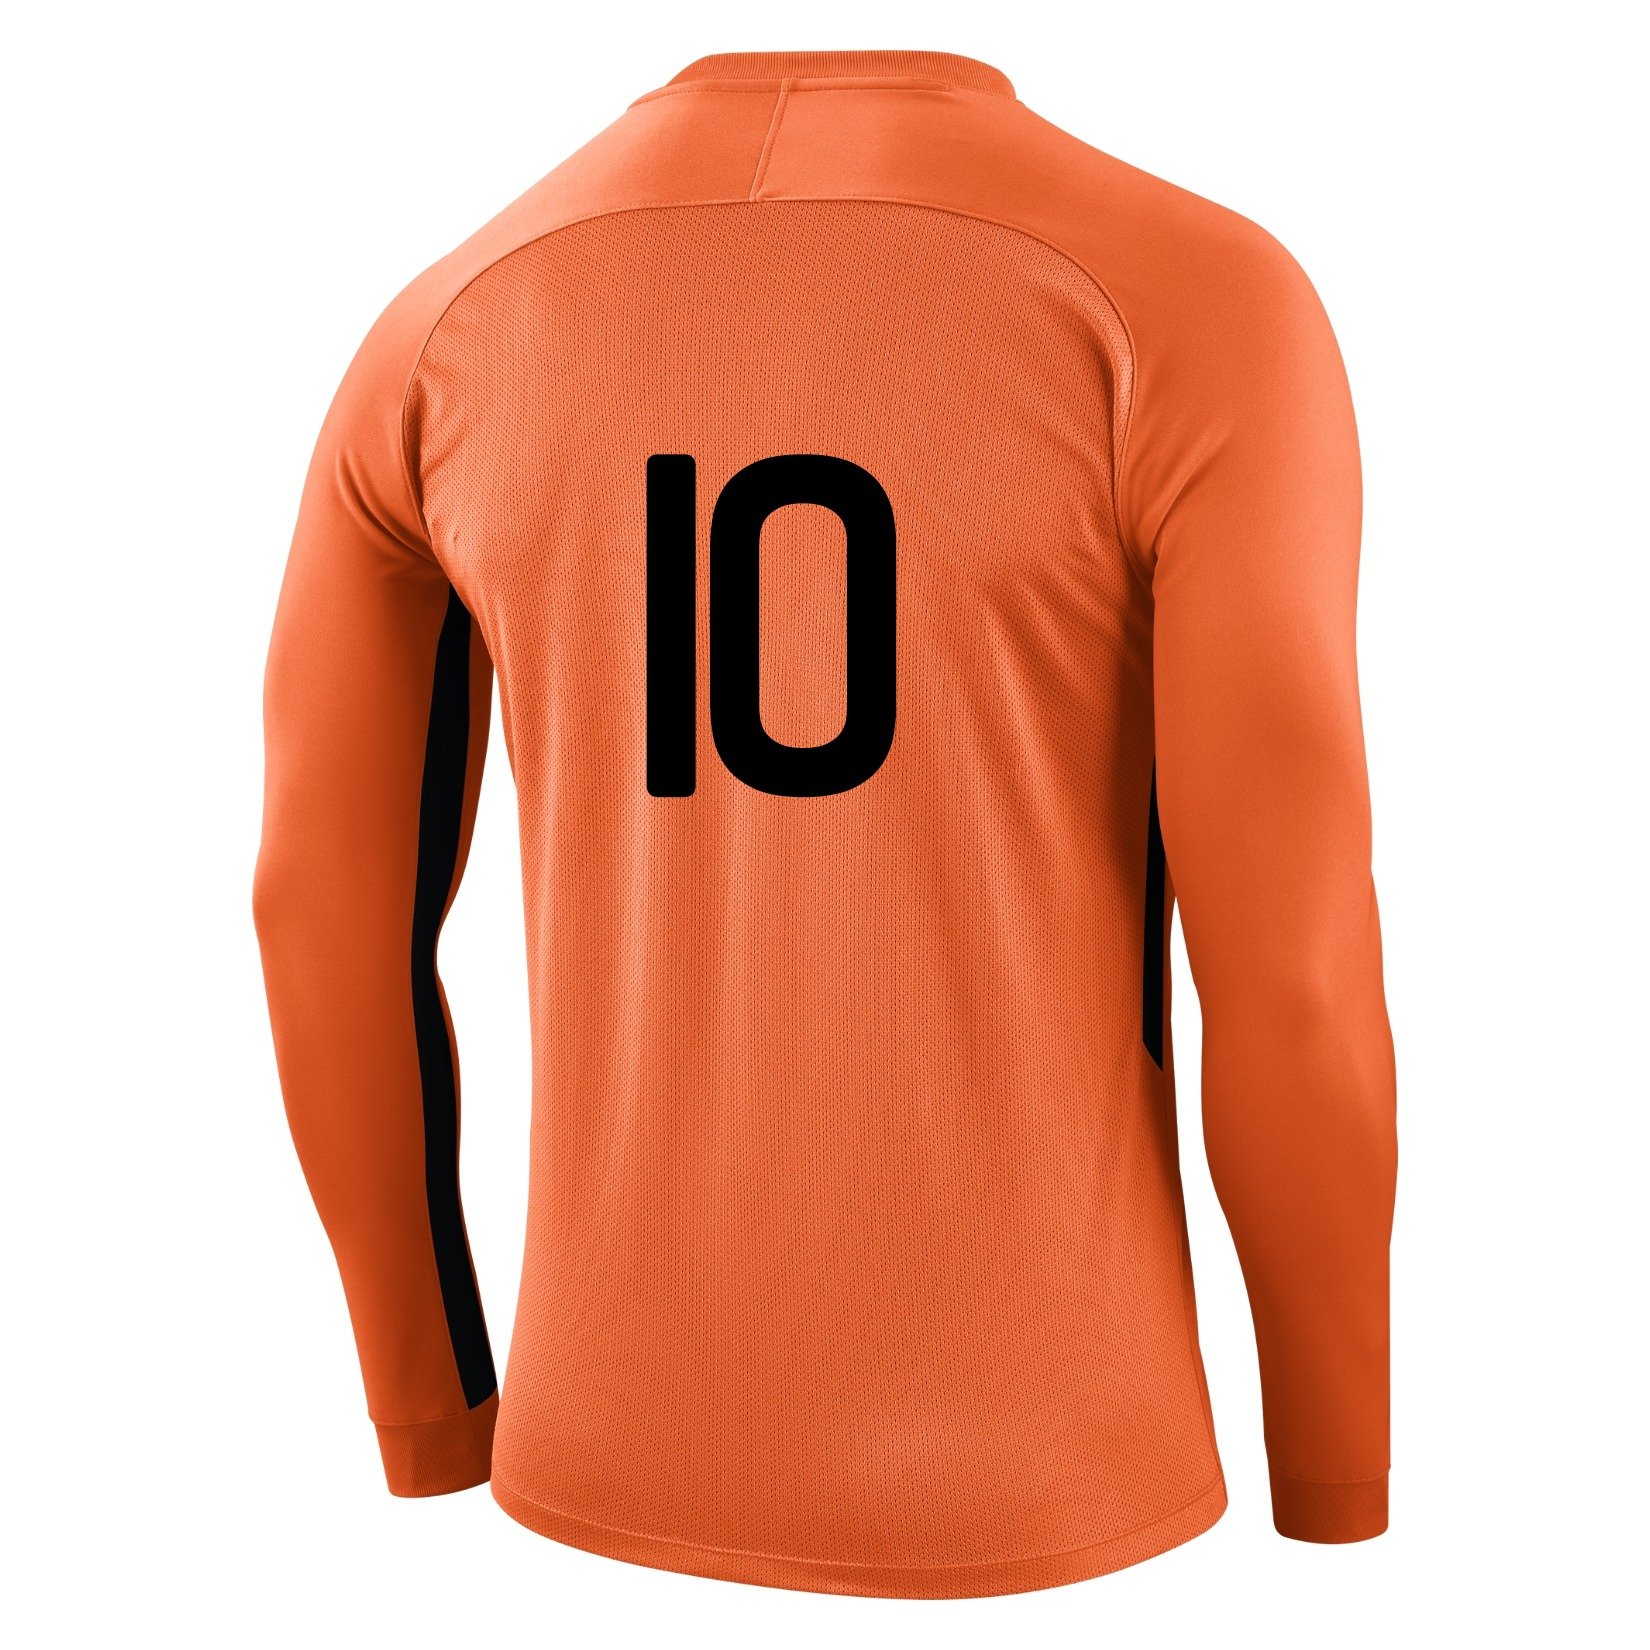 Nike Tiempo Premier Long Football Shirt Safety Orange-Safety Orange-Black-Black